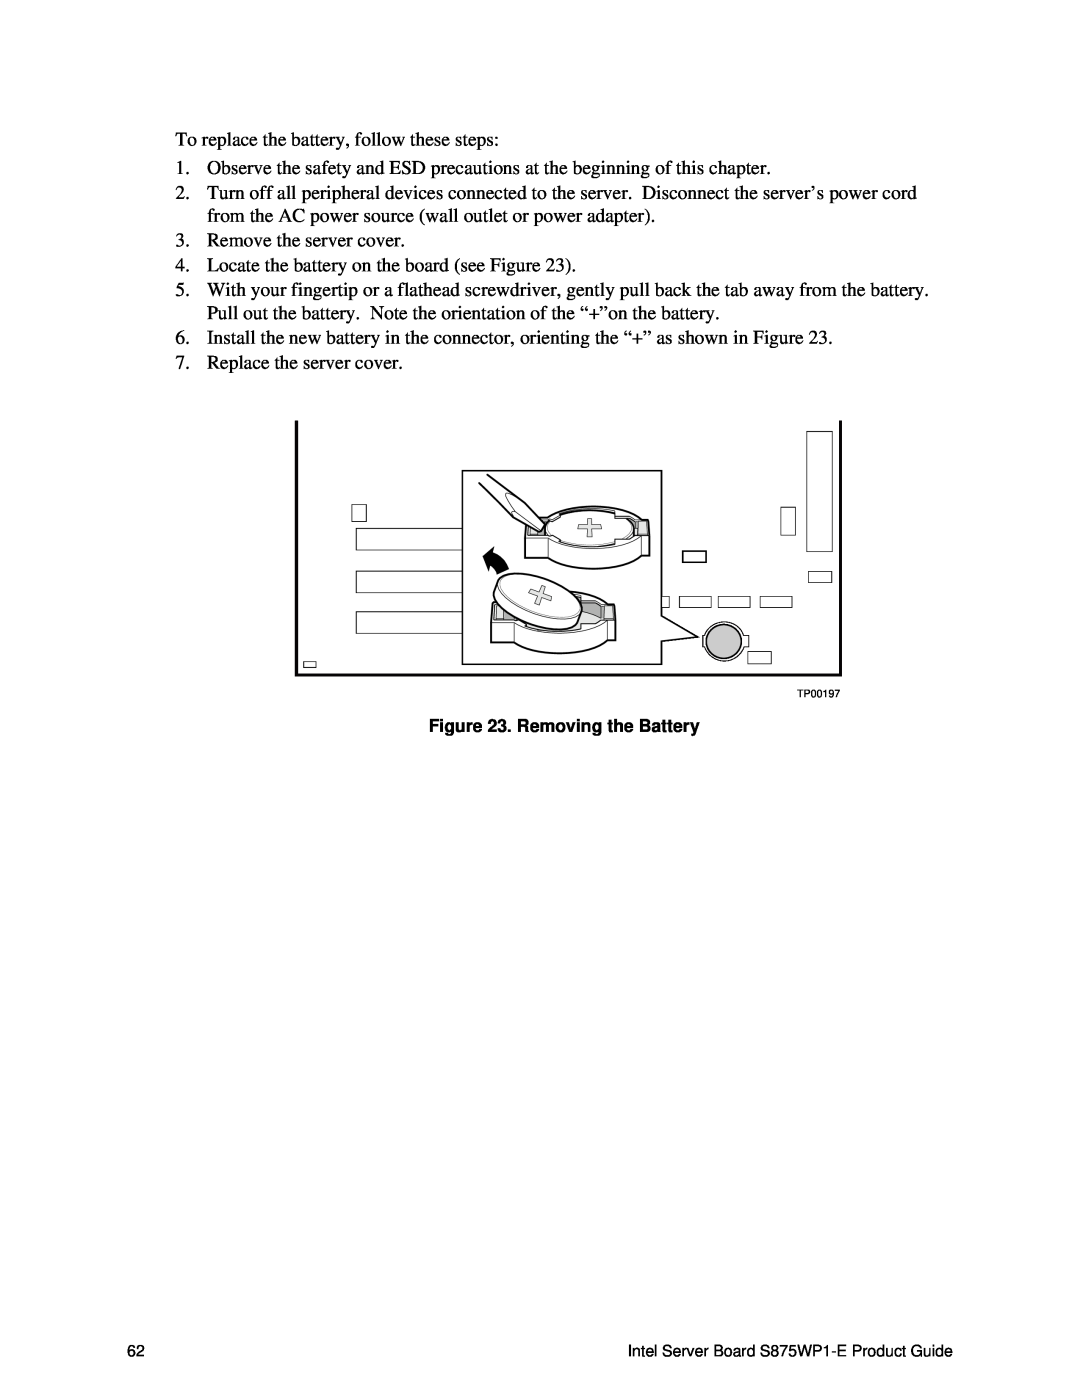 Intel S875WP1-E manual Removing the Battery, TP00197 